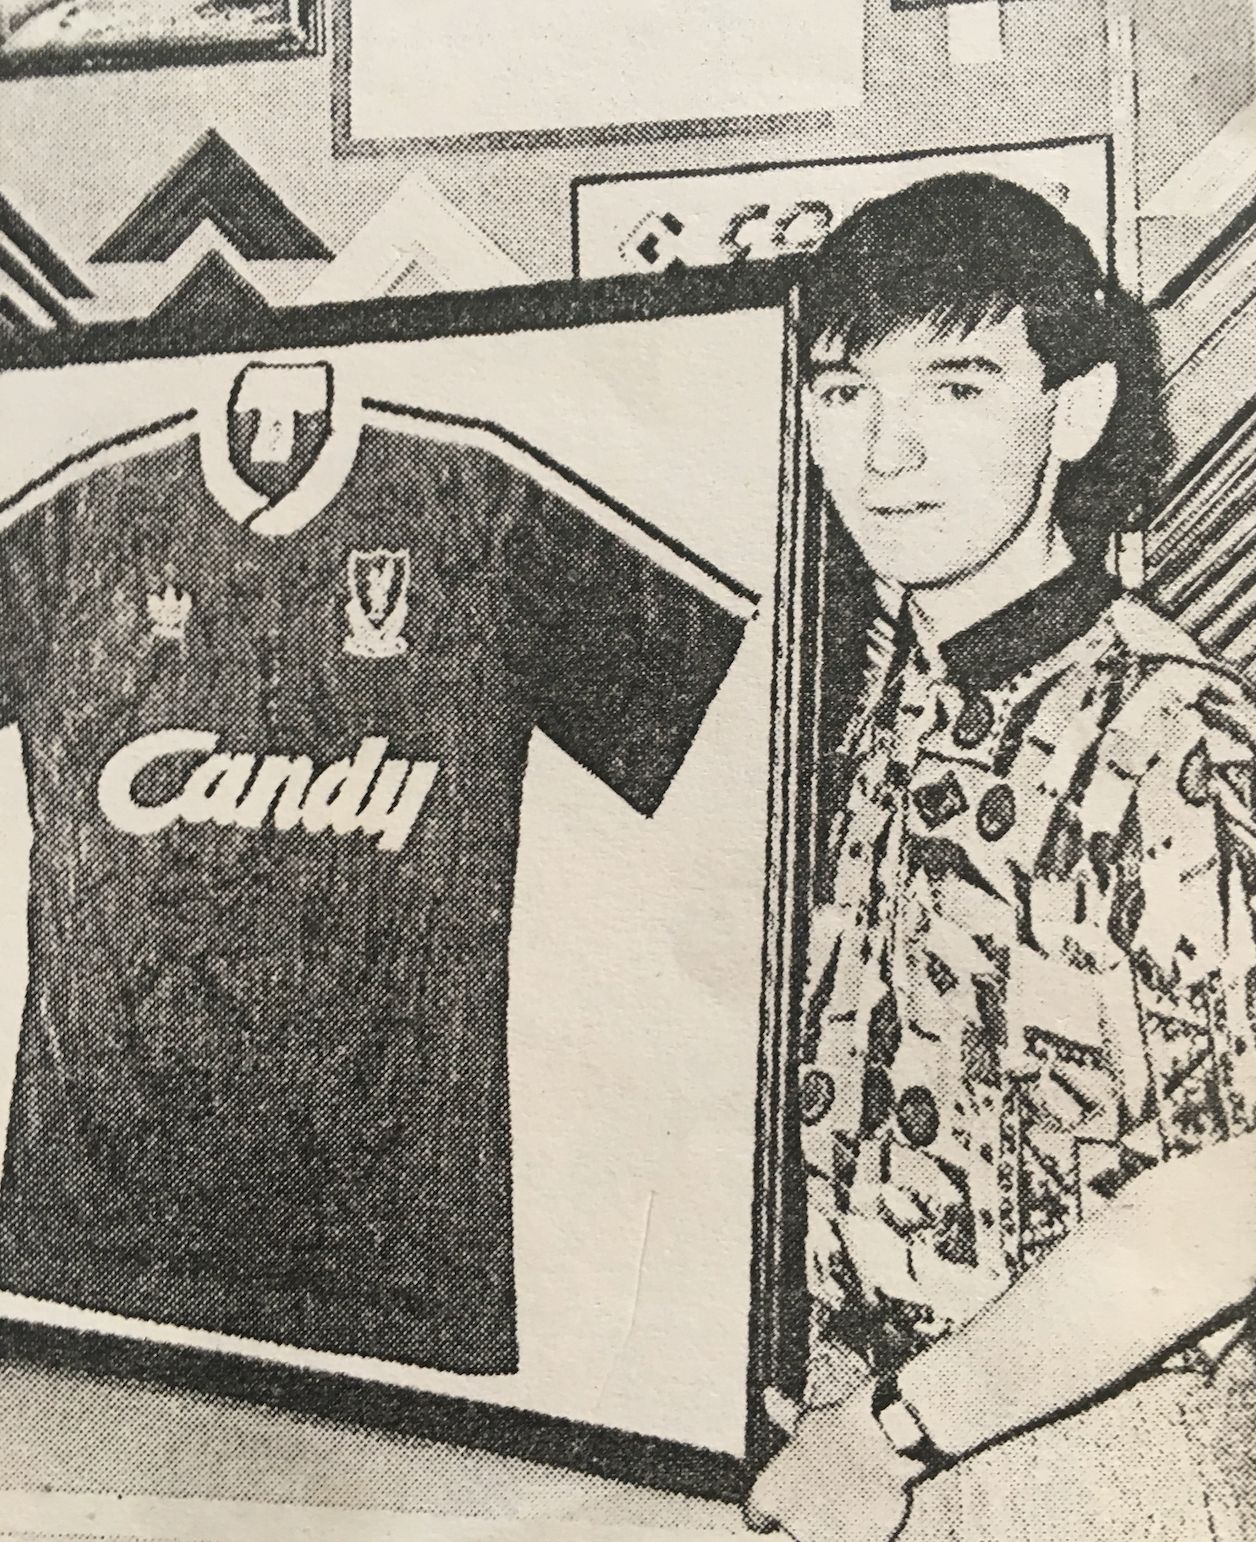 Mark Aspden with a framed Liverpool shirt.